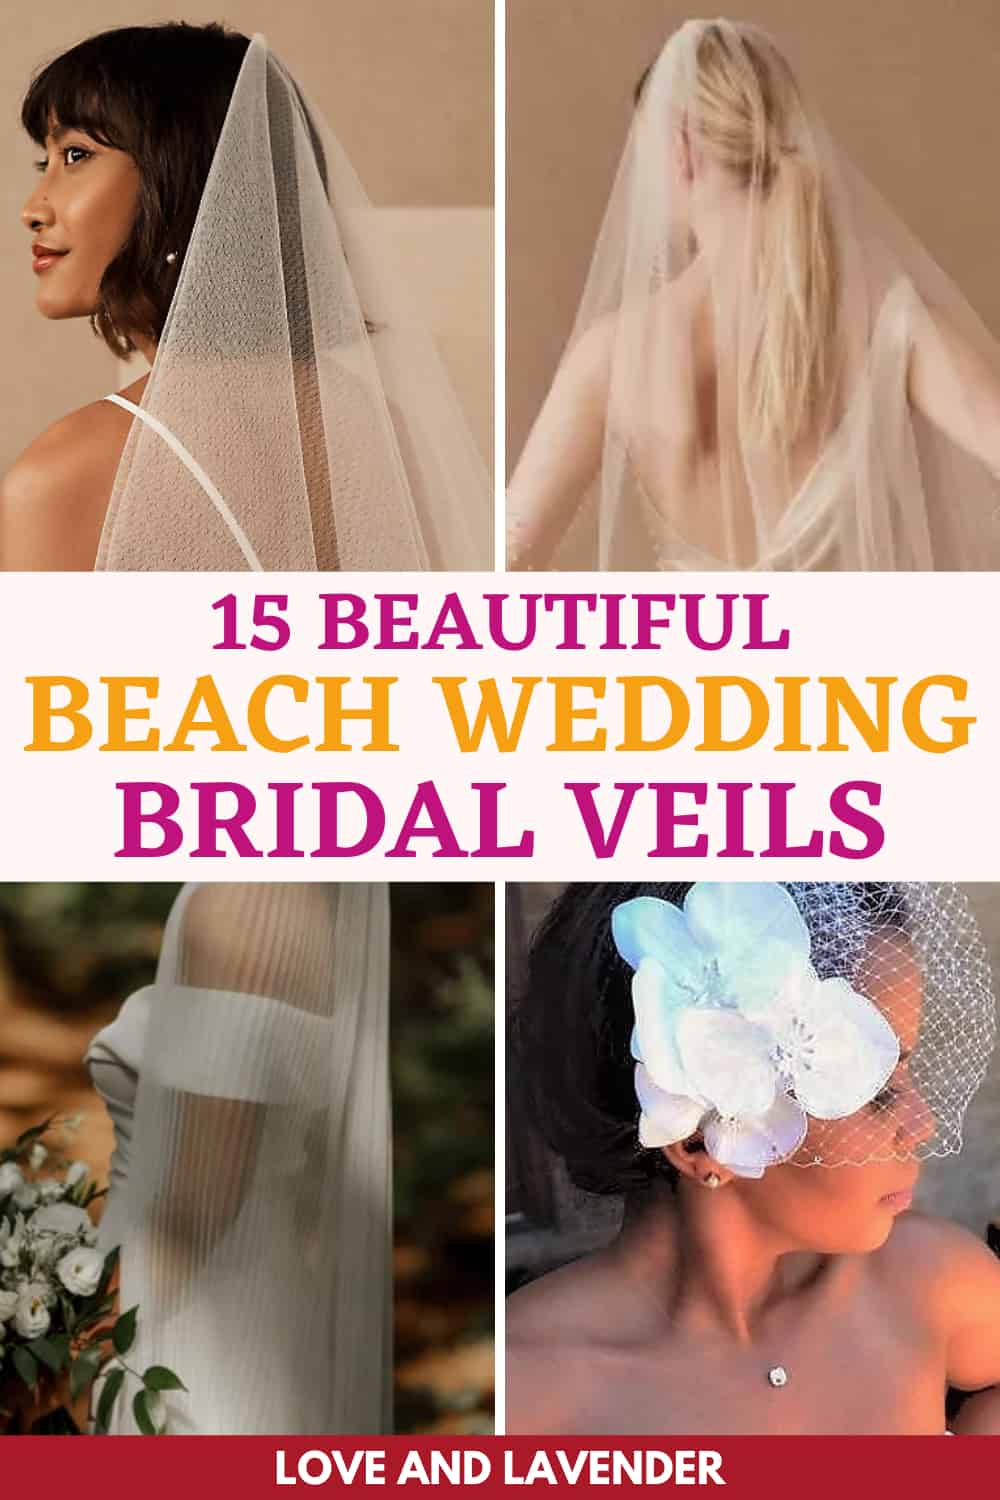 15 Beautiful Beach Wedding Bridal Veils - Pinterest pin